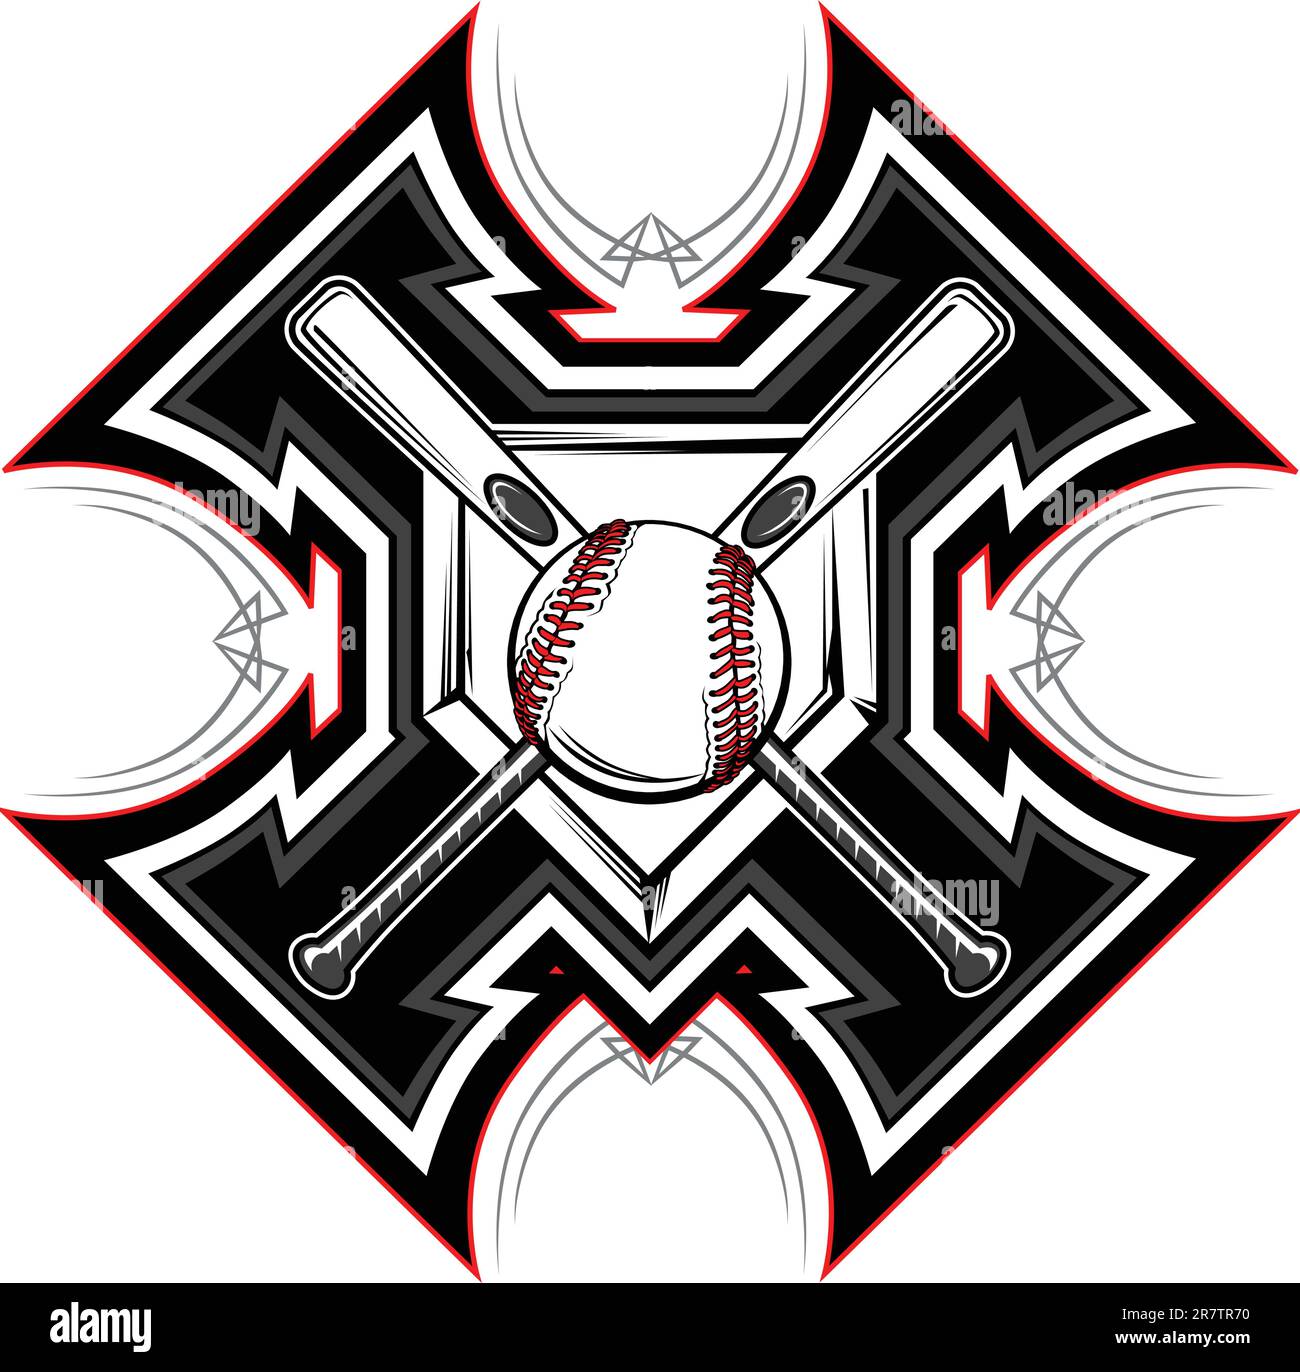 Baseball Bats, Baseball, and Home Plate with Tribal Borders Vector Graphic Stock Vector